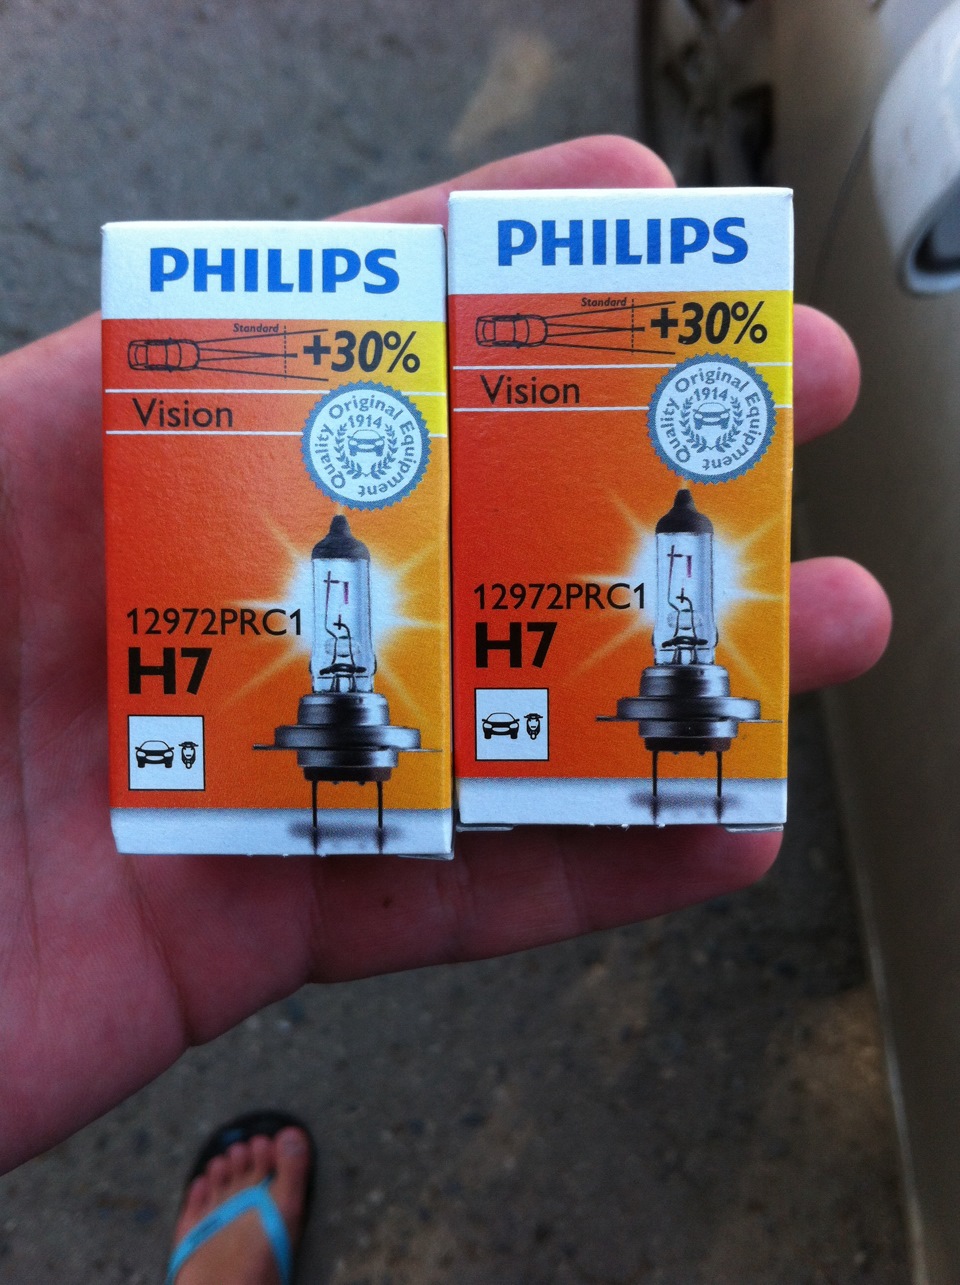 Philips vision купить. 12972prc1. Лампы Филипс стандарт +30. Philips Vision +30.